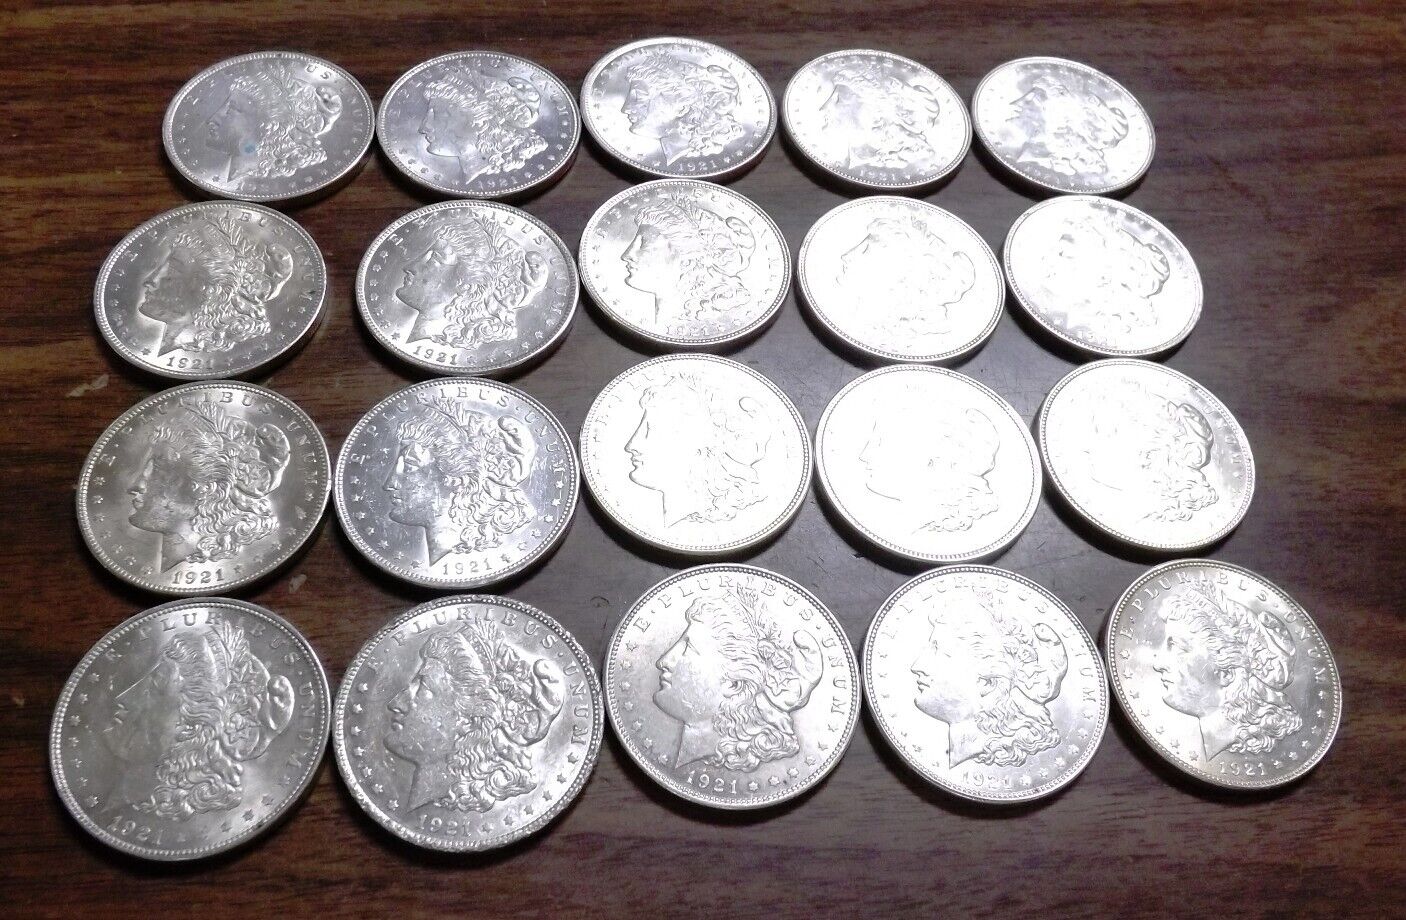 20 Coin Roll of 1921 BU Morgan US Silver Dollars Uncirculated Free Ship